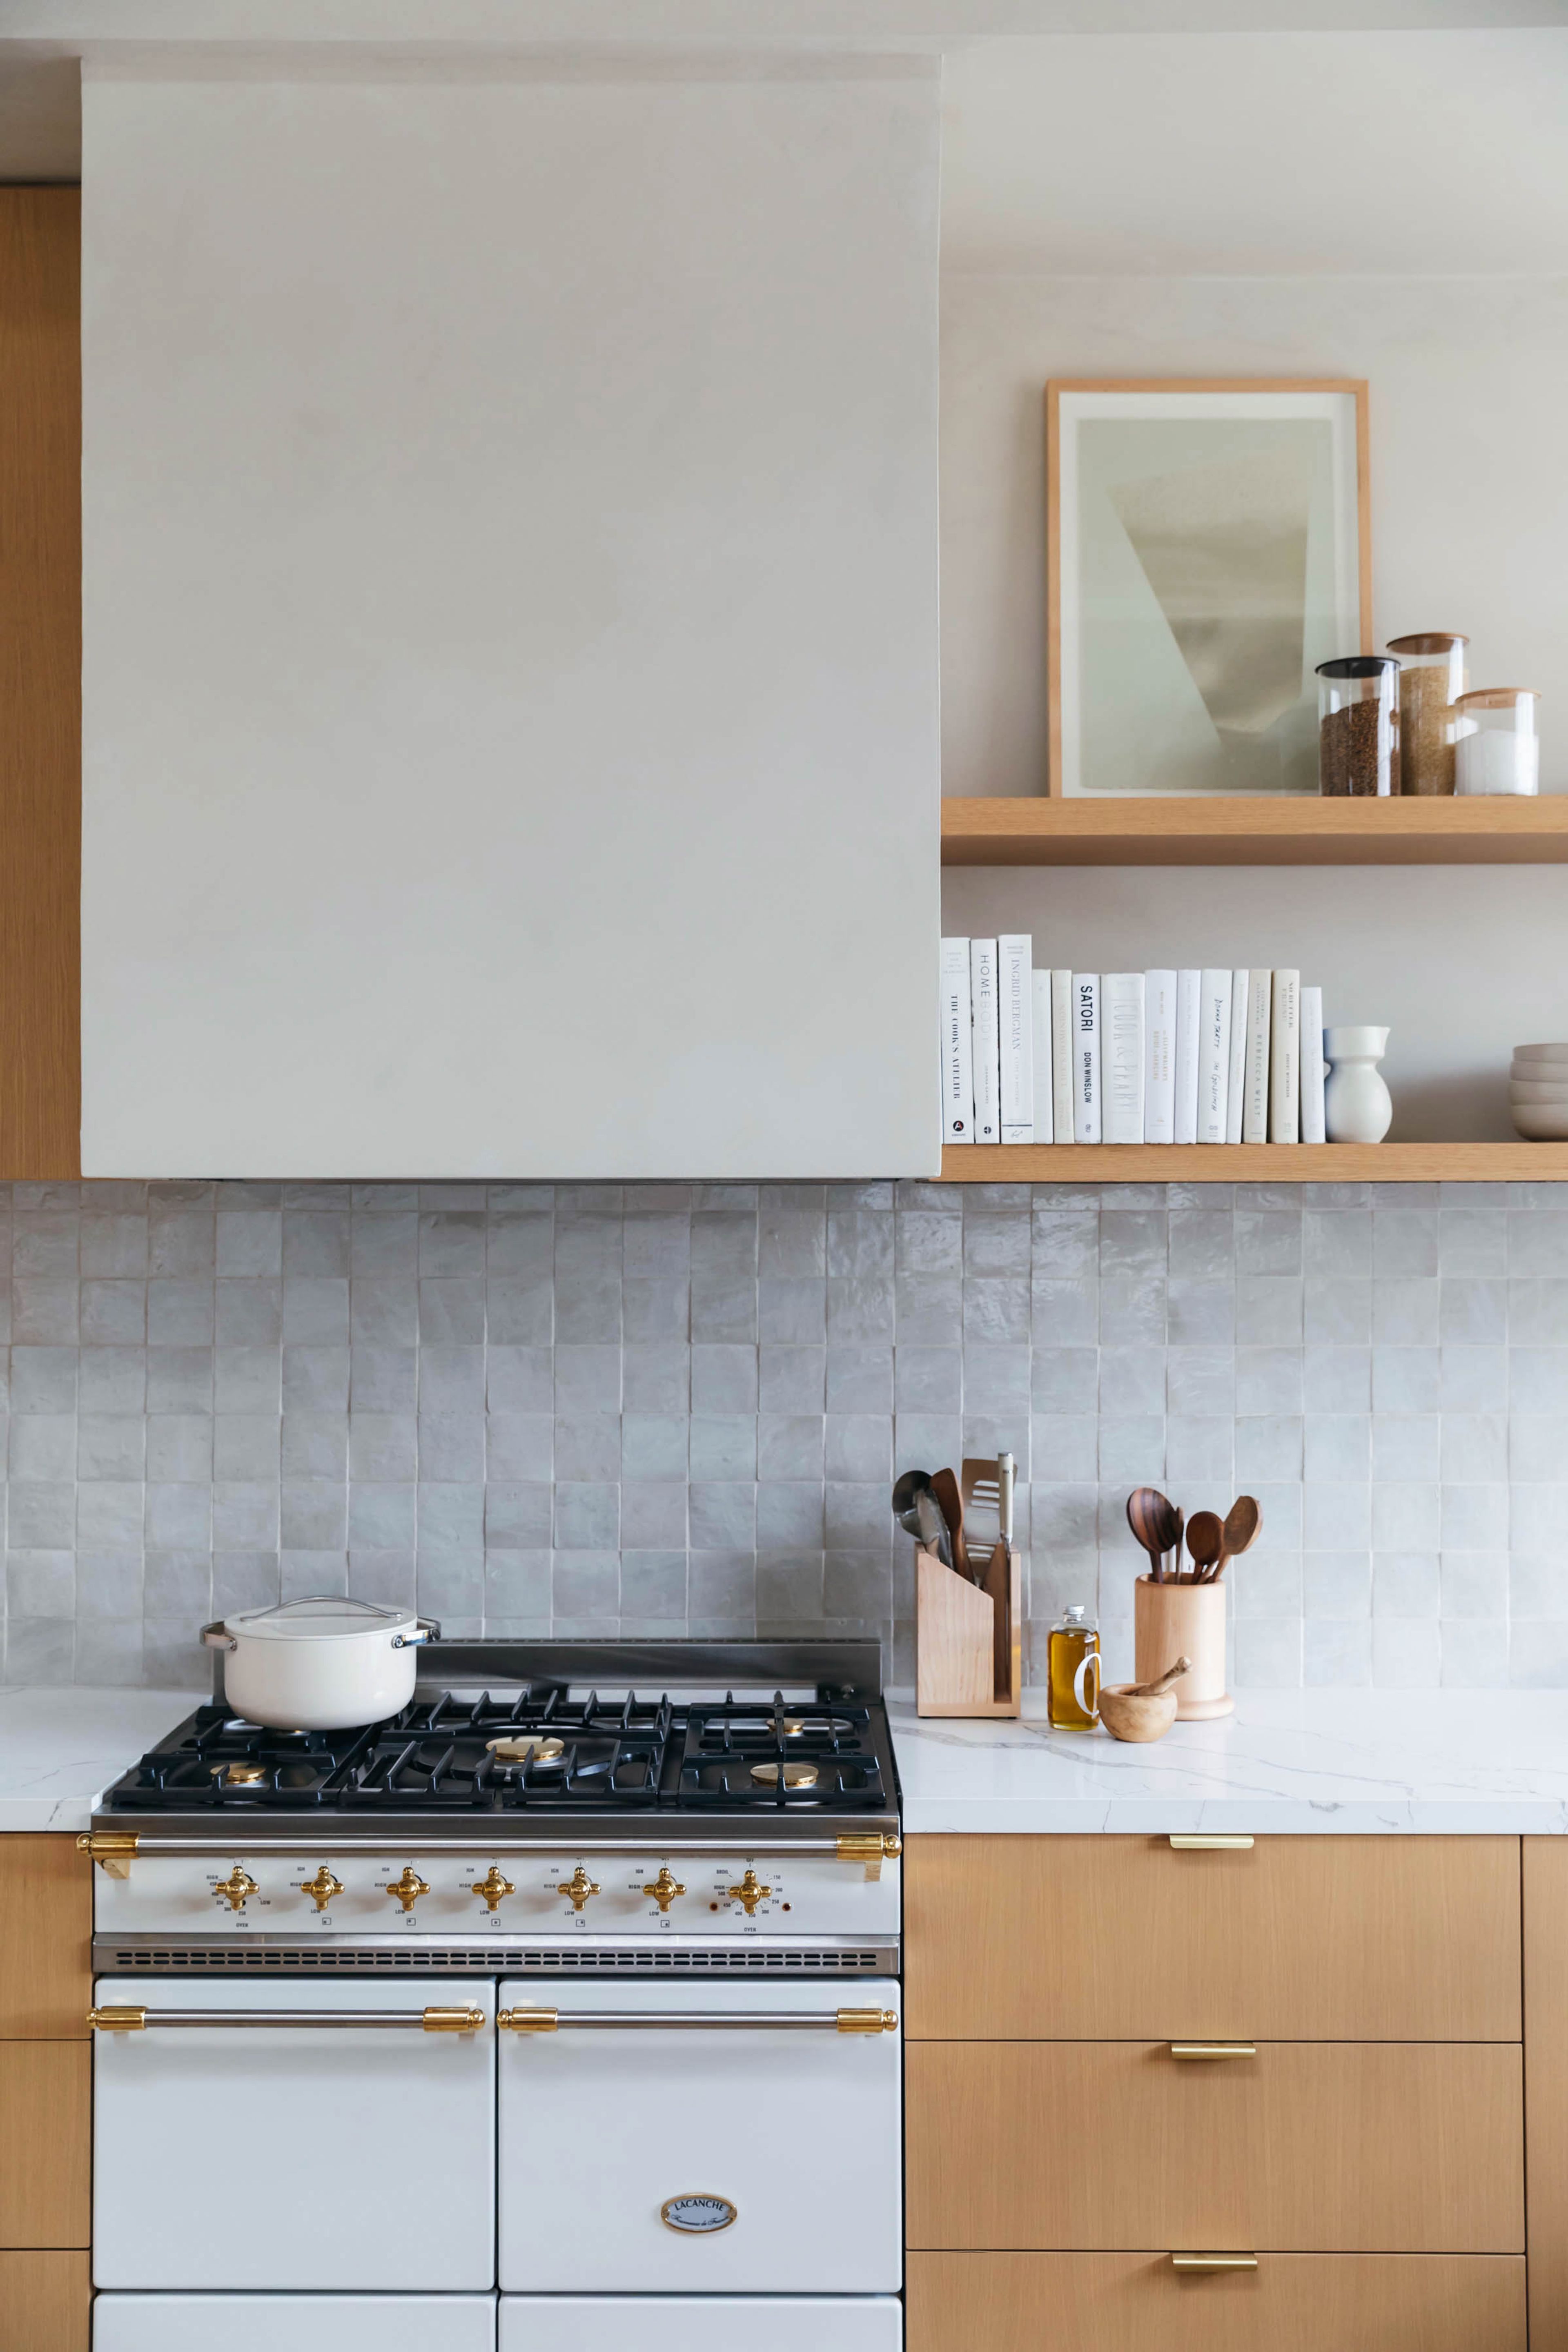 Handmade tile, plaster lime washed walls & custom cabinets